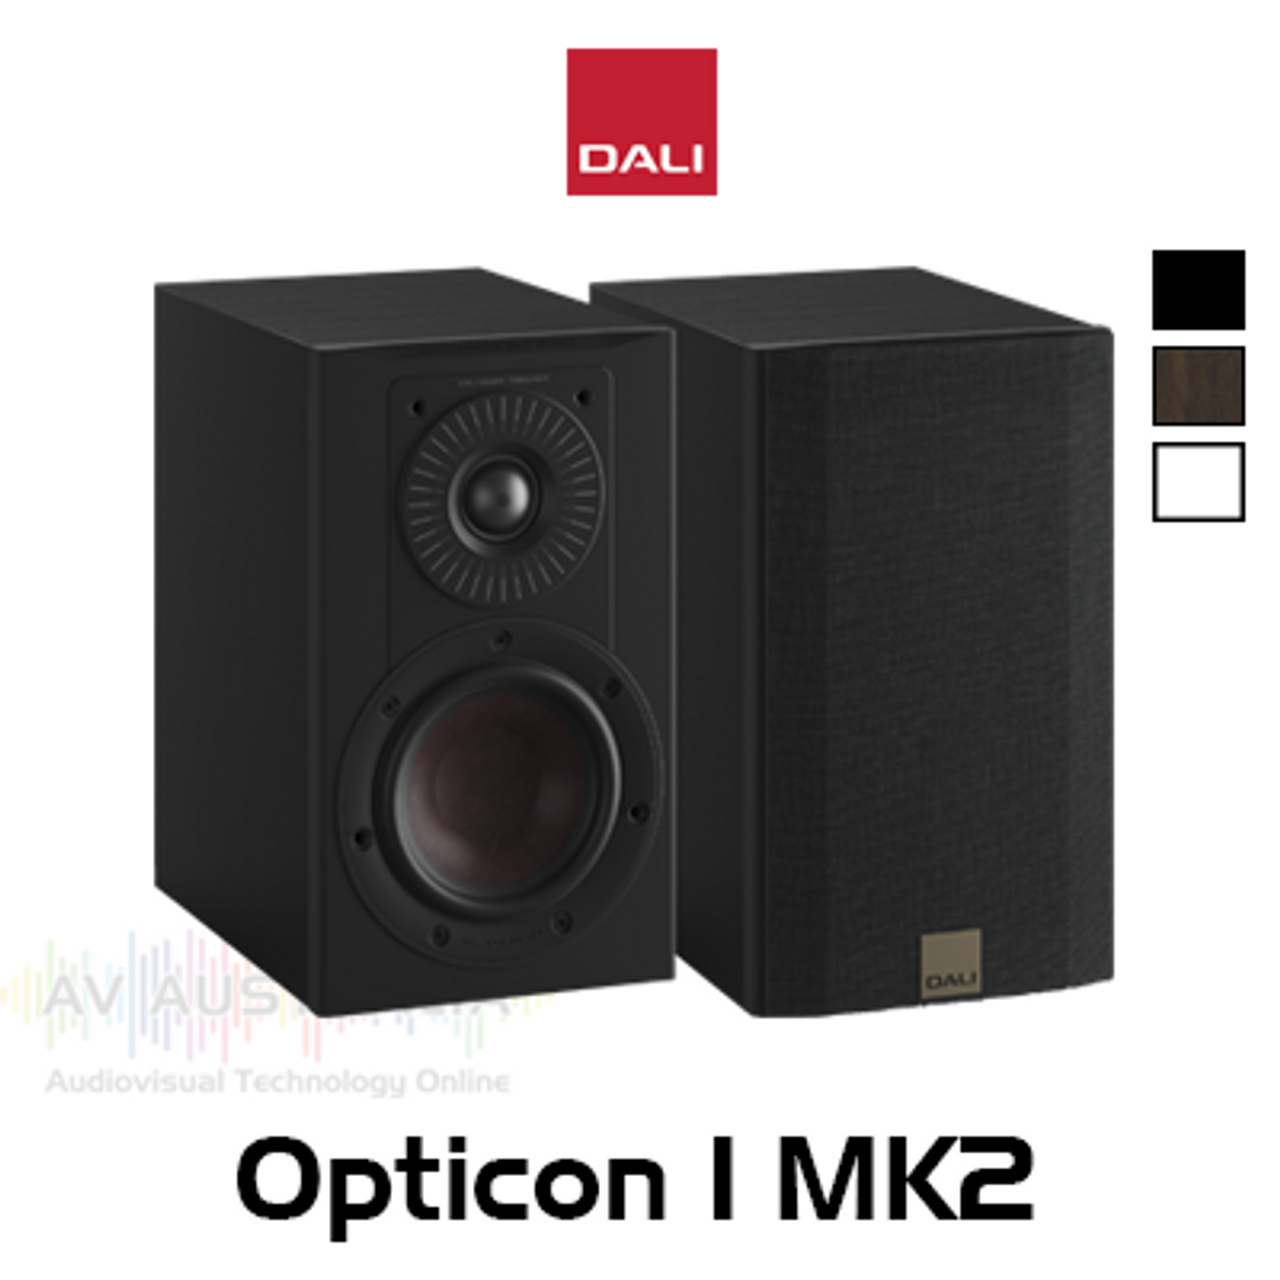 Dali Opticon 1 MK2 4.75" Bookshelf Speakers (Pair)